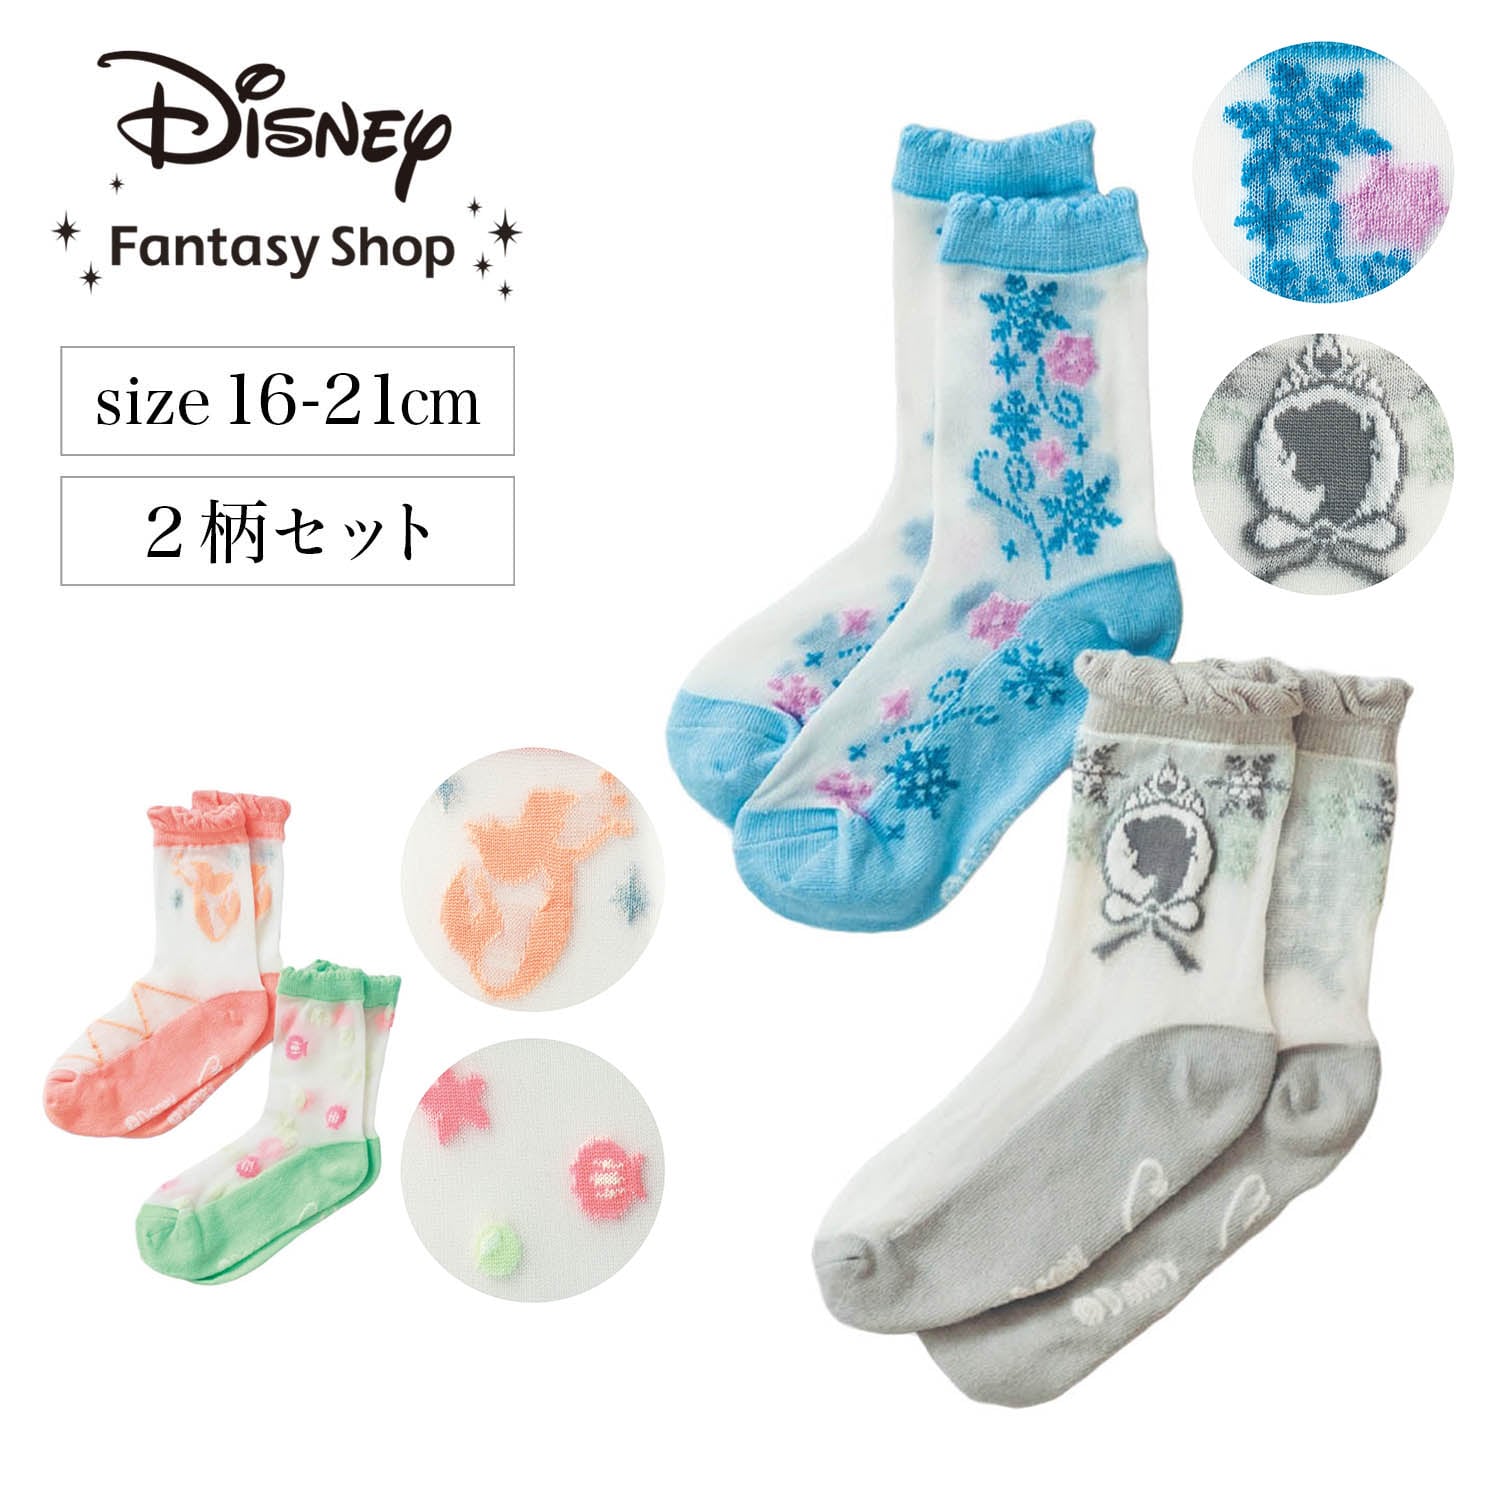 50%OFF！【ディズニー/Disney】シースルー靴下2柄セット(選べるキャラクター)